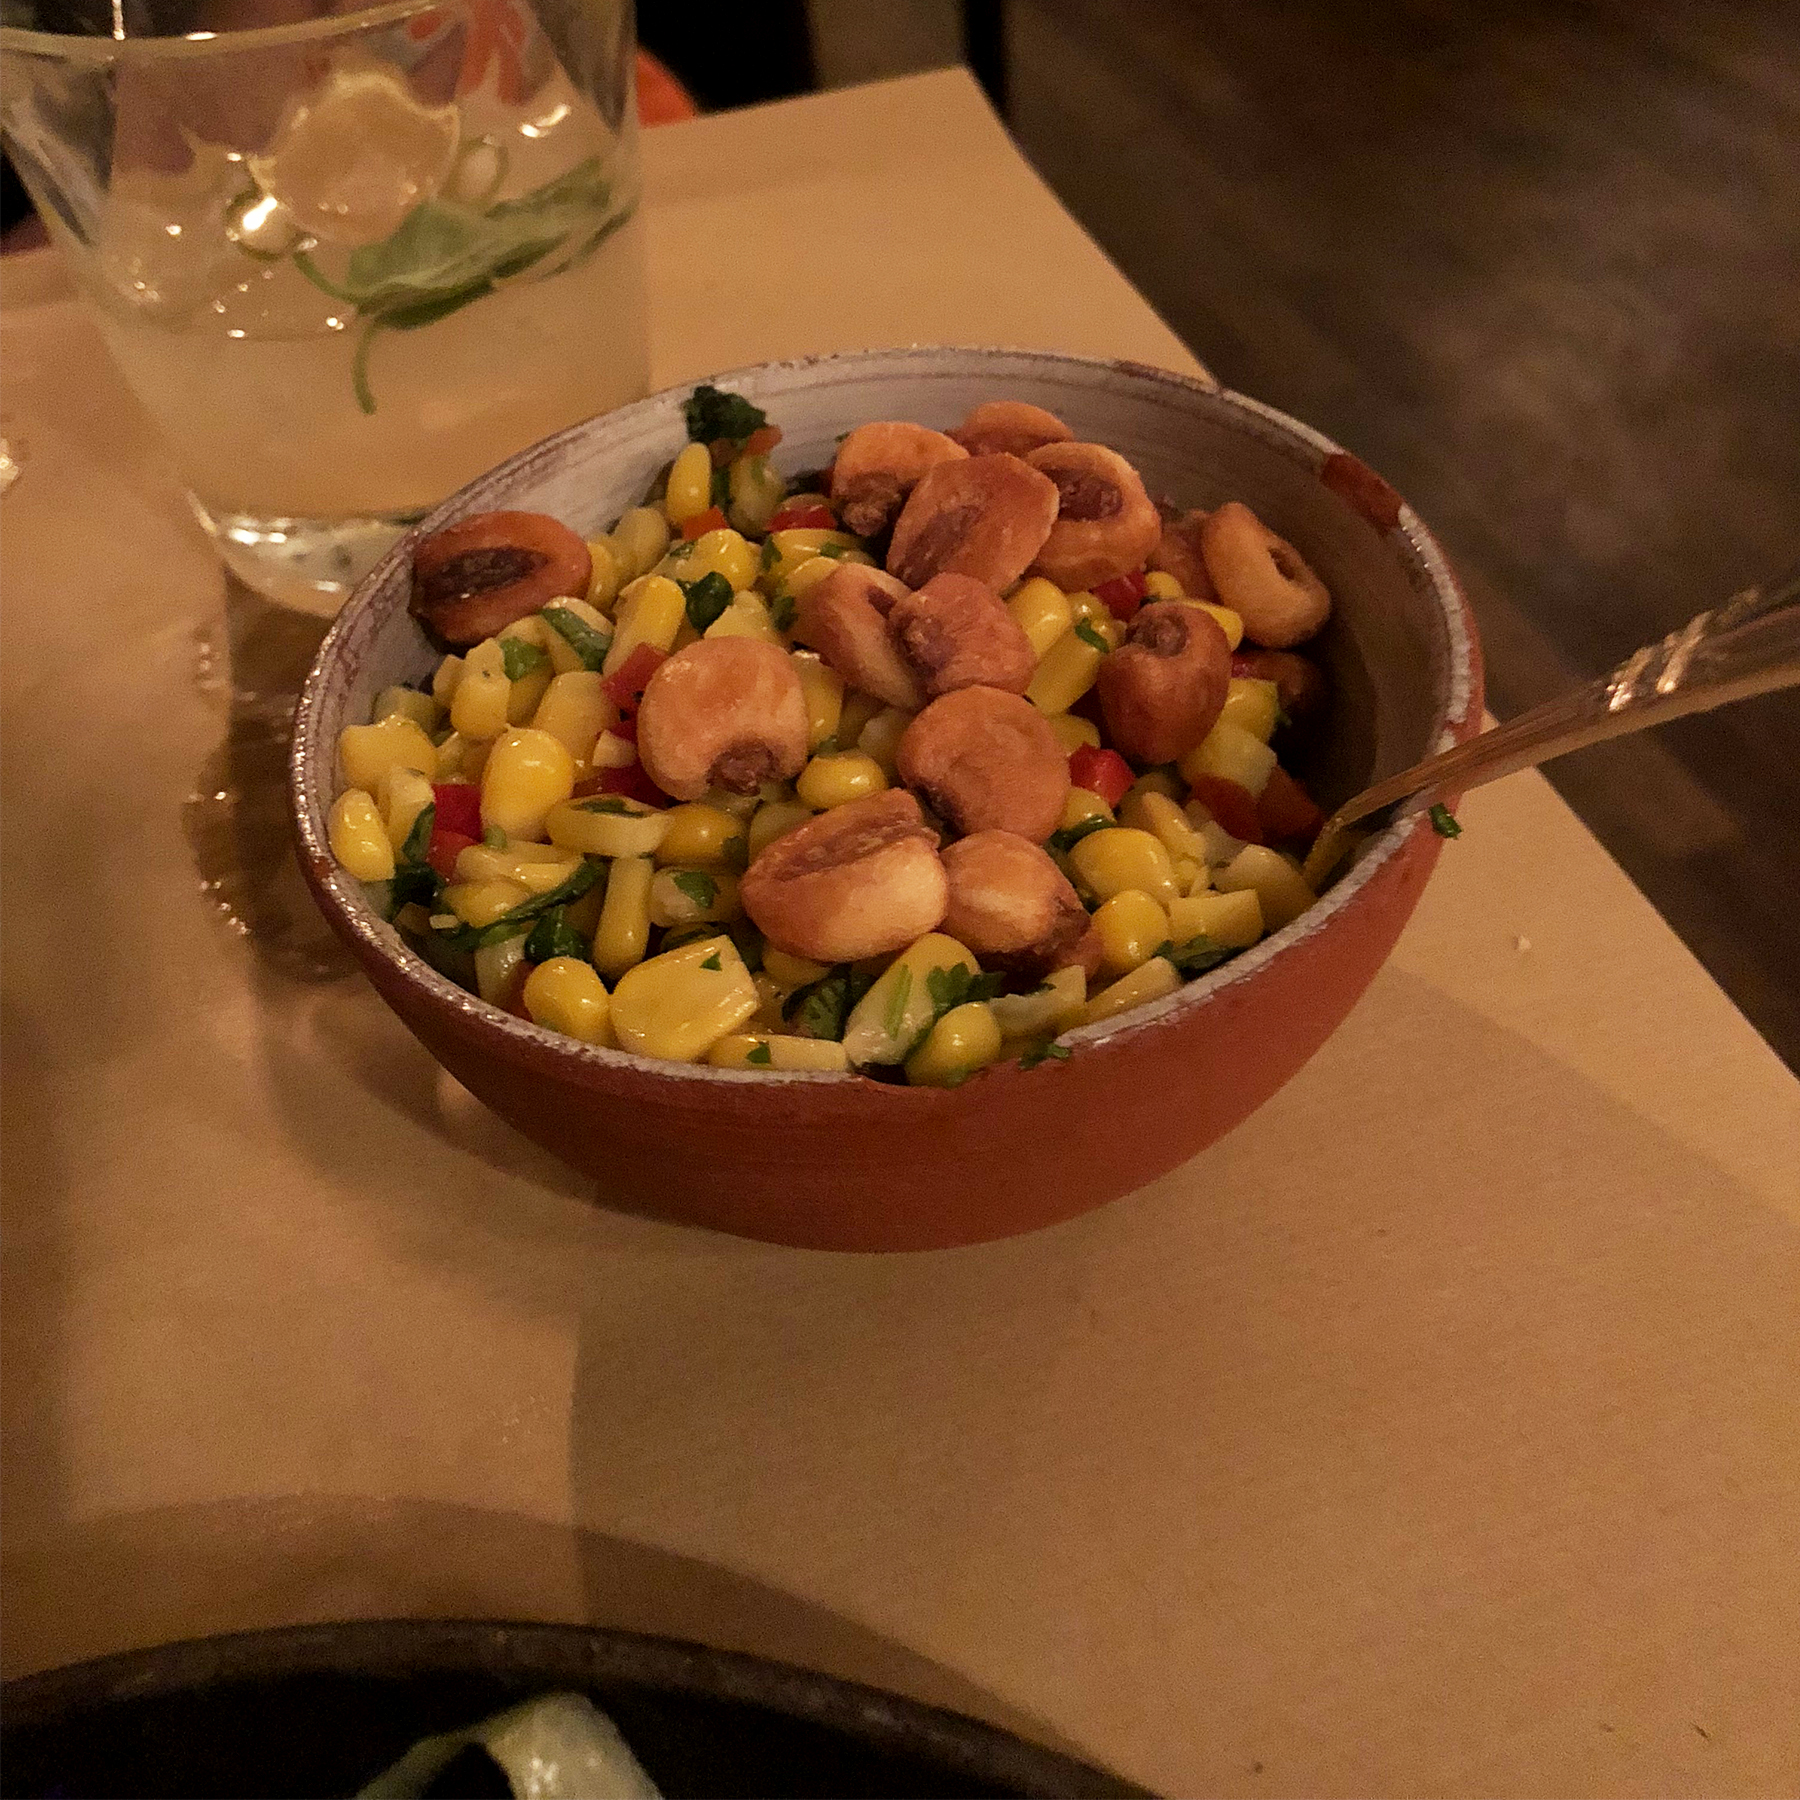 Corn salad with fancy cornuts